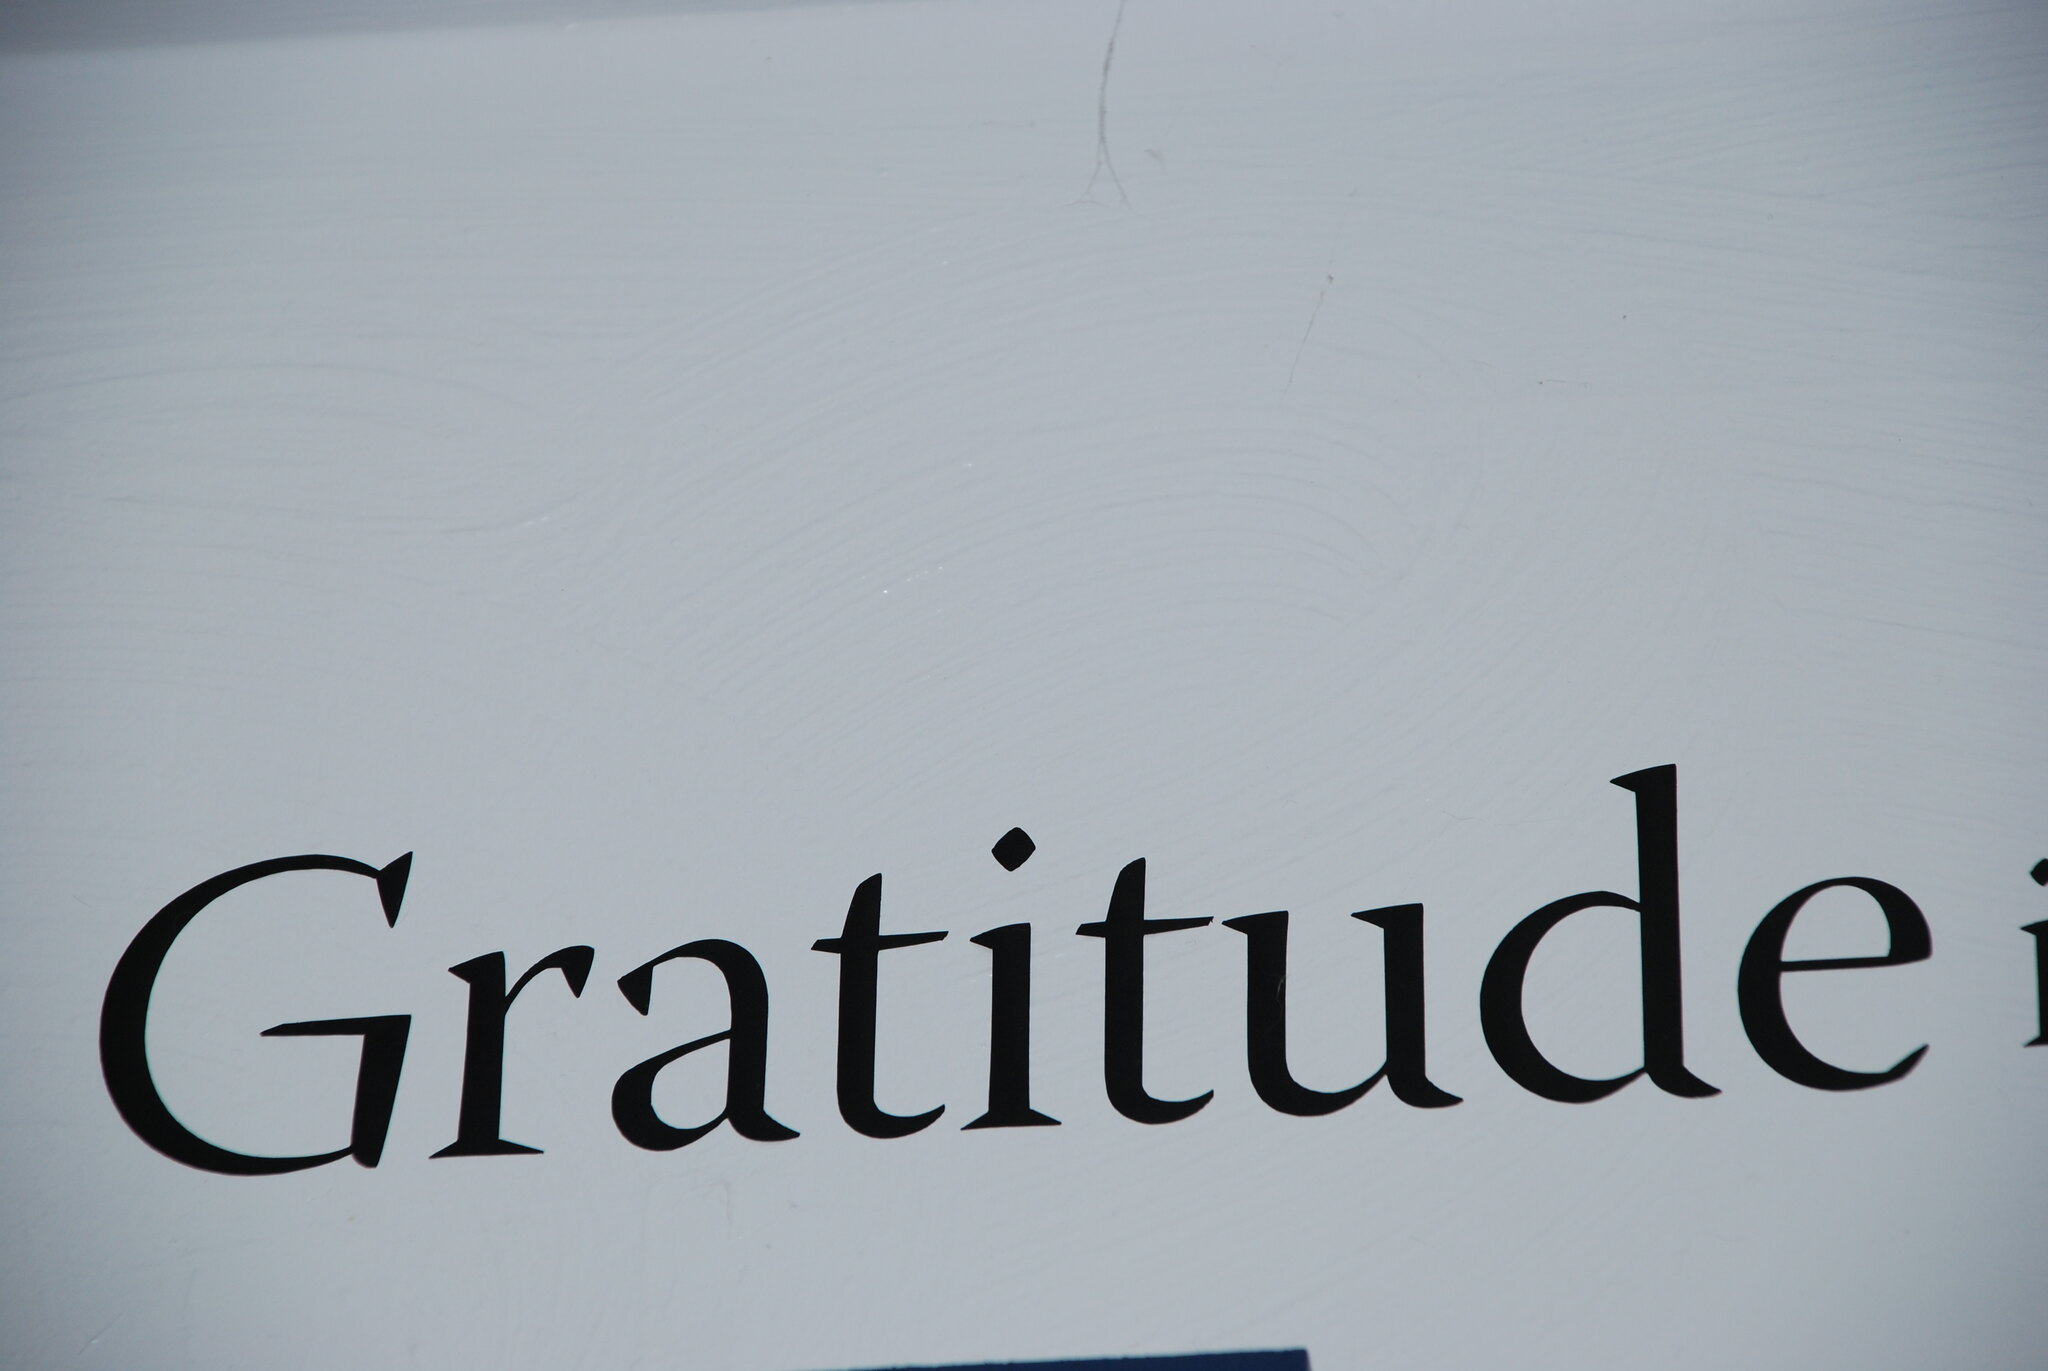 Gratitude isn’t just some soft, snowflake bullshit